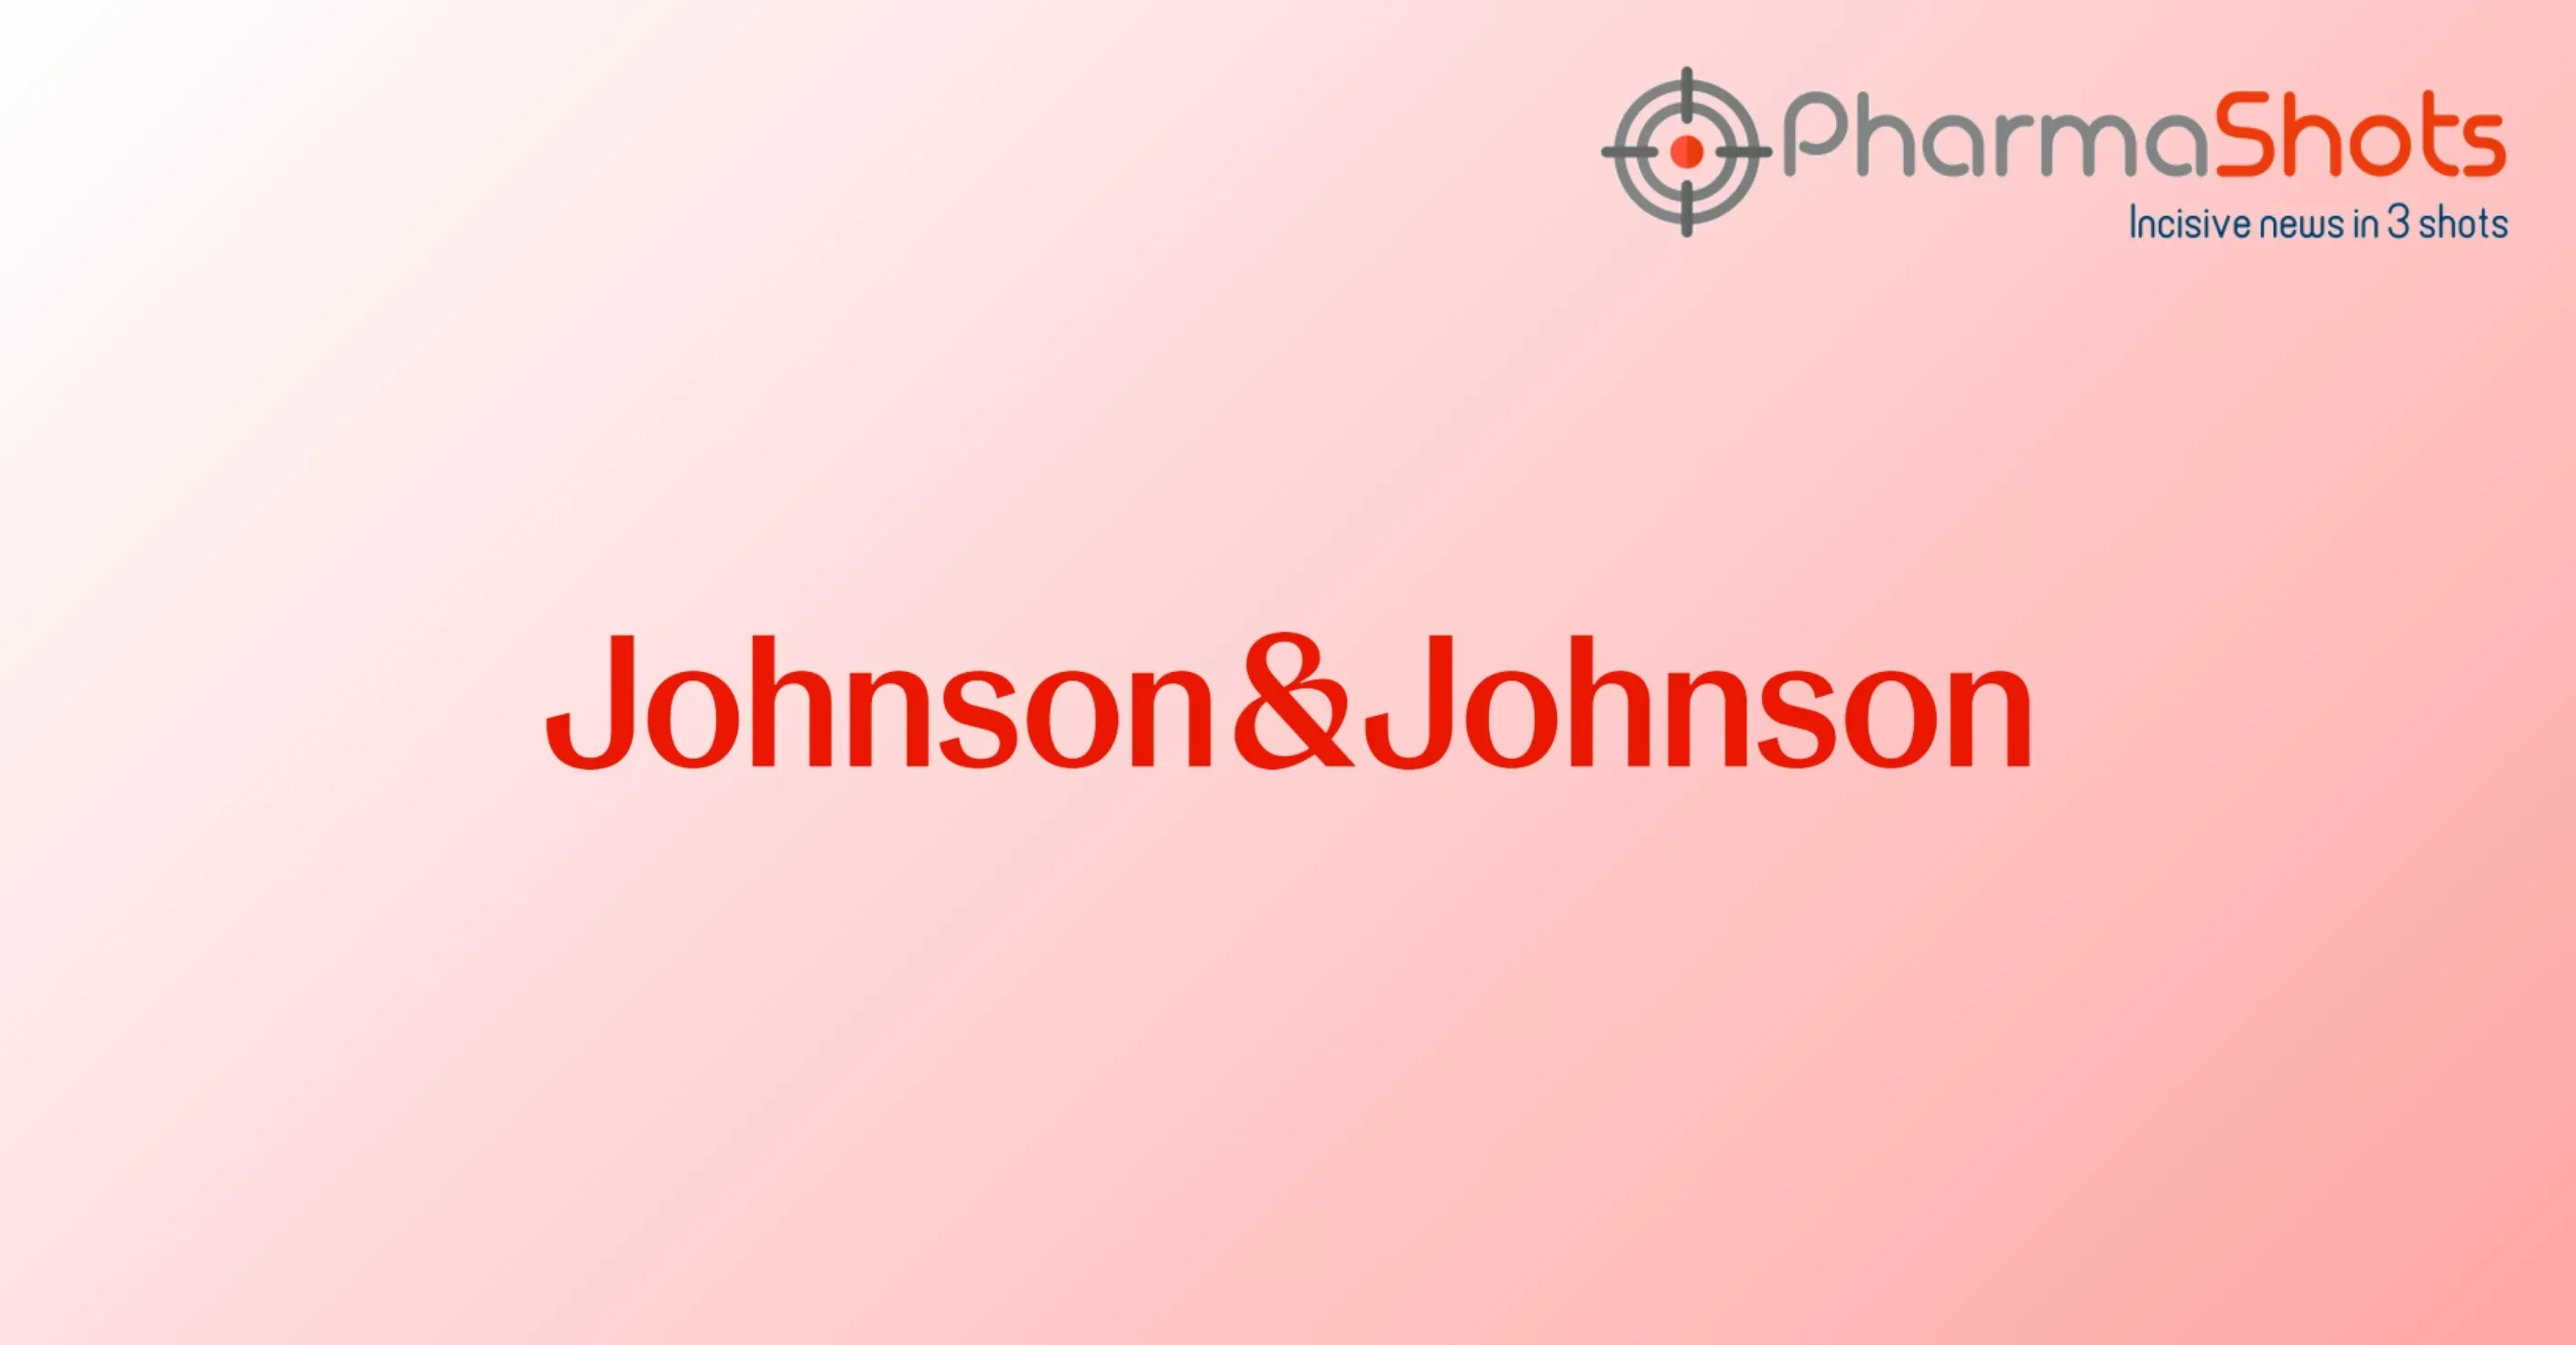 Johnson & Johnson Reports sBLA Submission of Tremfya (Guselkumab) to the US FDA for Treating Ulcerative Colitis